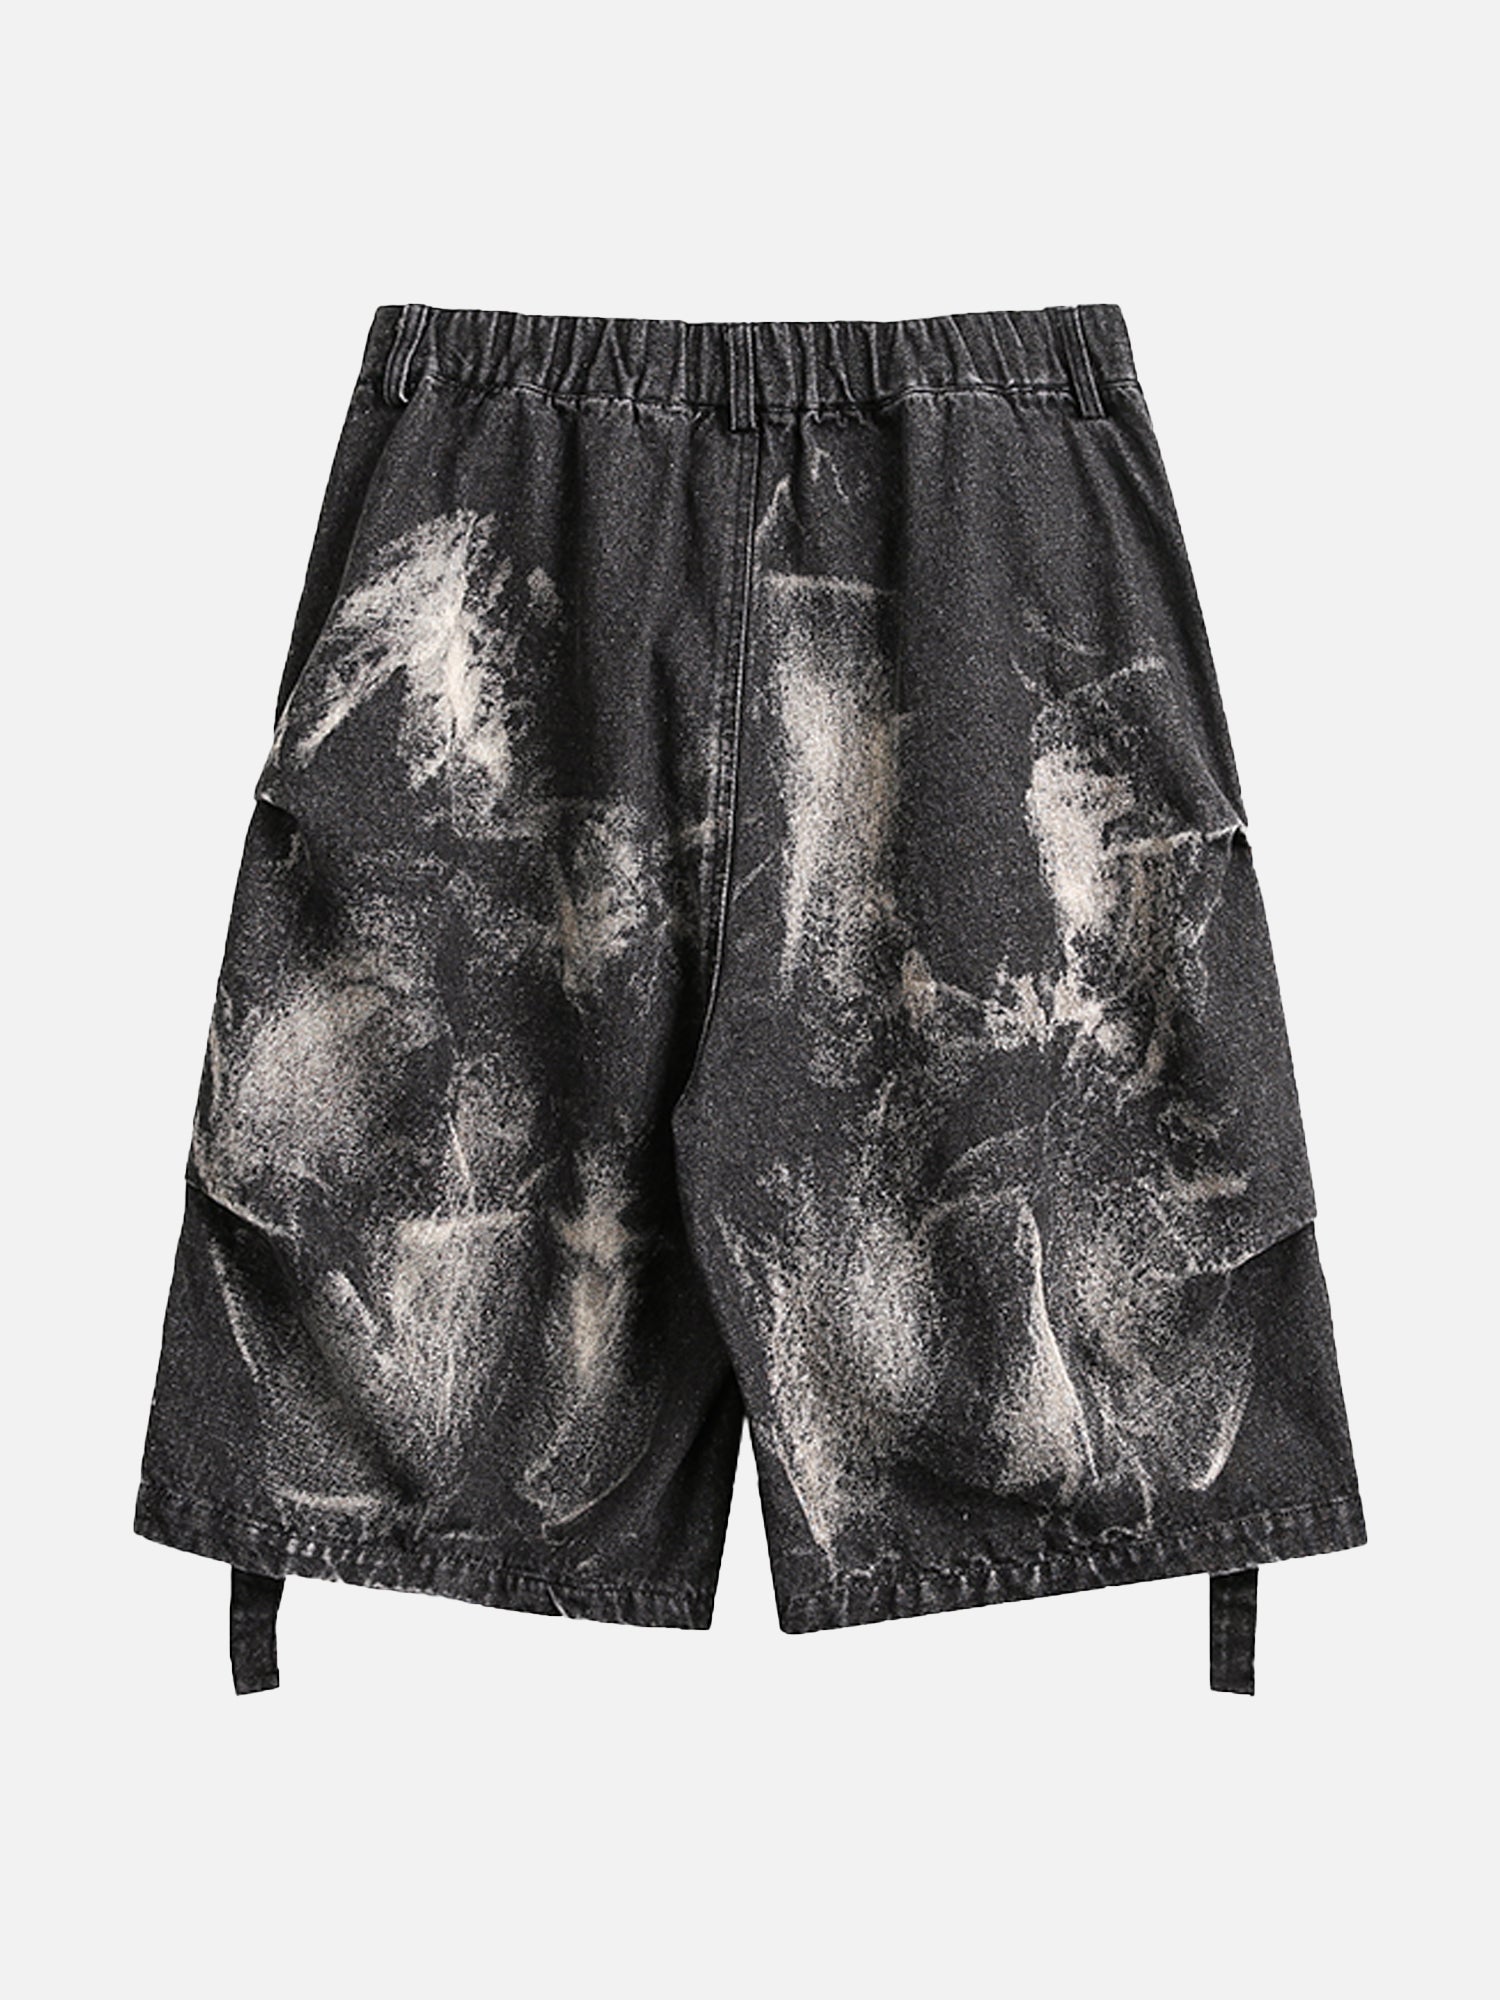 Thesupermade High Street Washed Distressed Design Denim Shorts